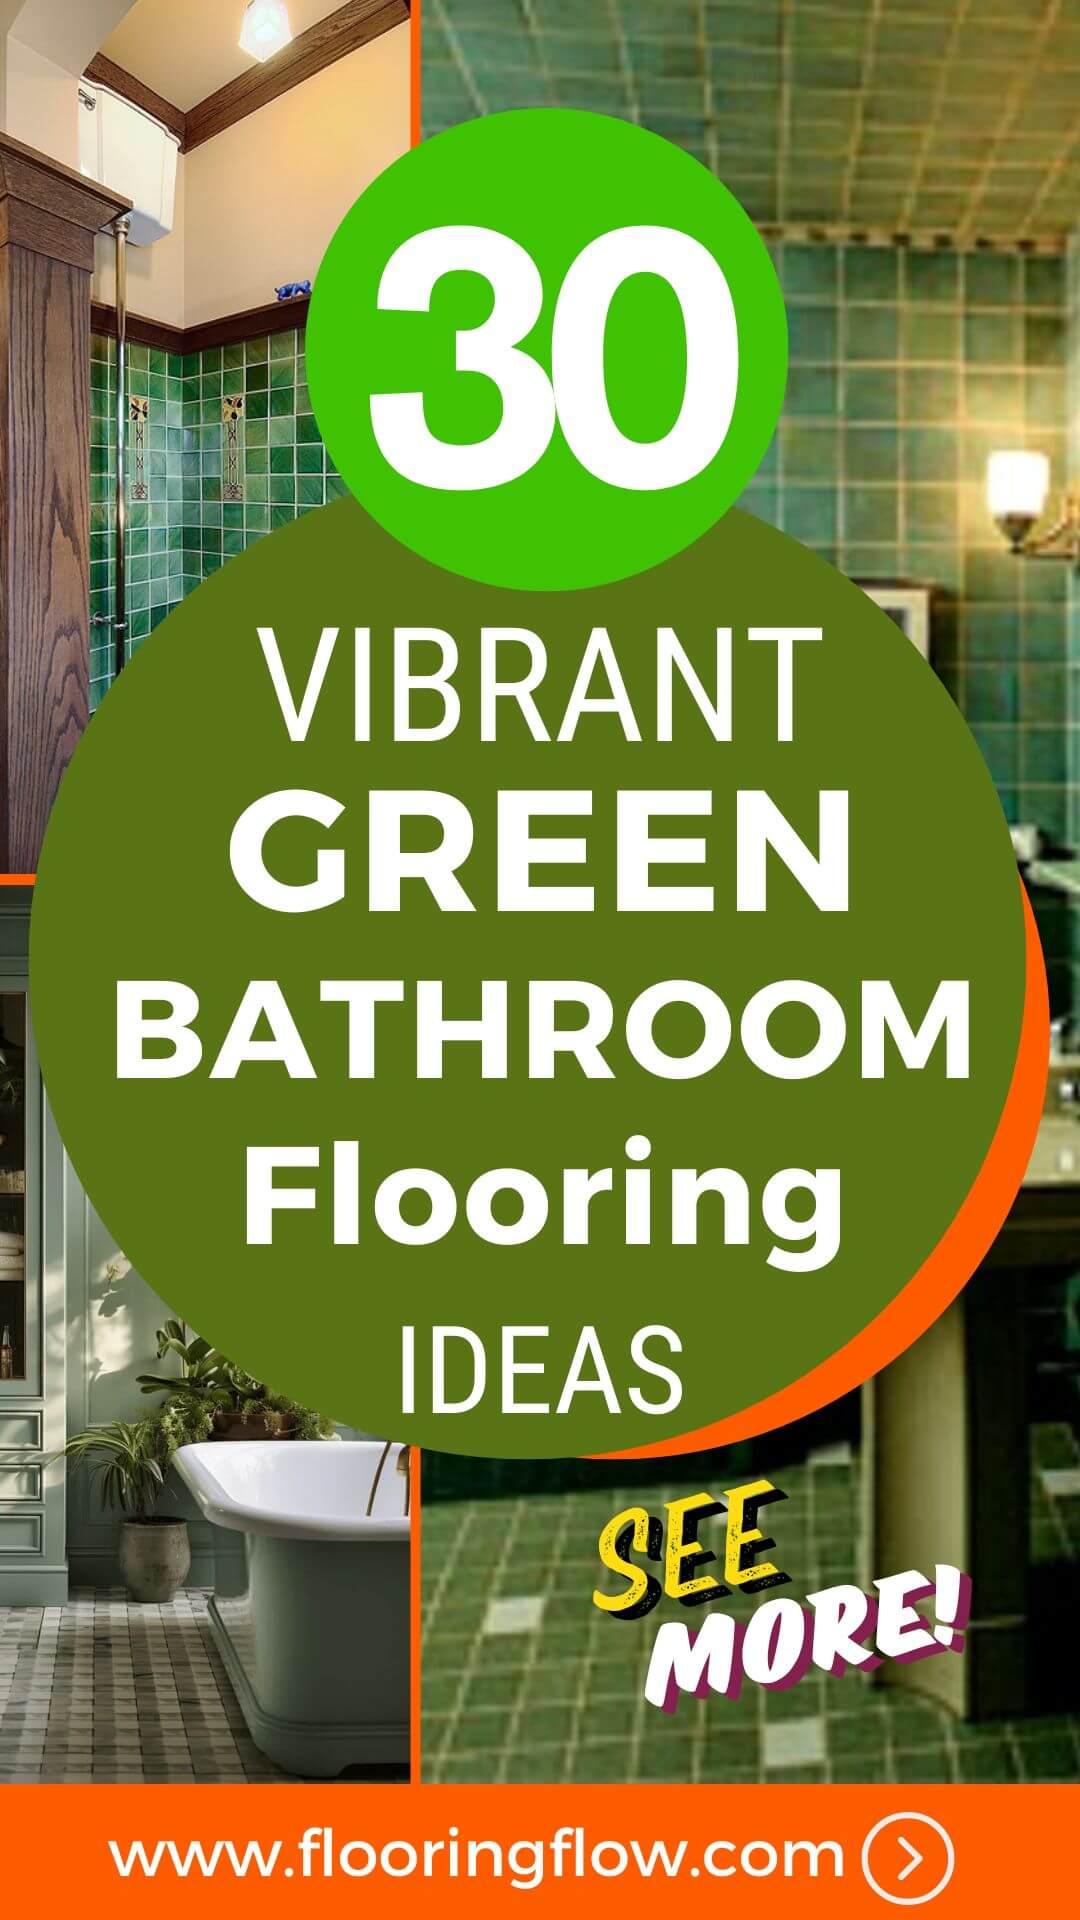 Green bathroom flooring ideas